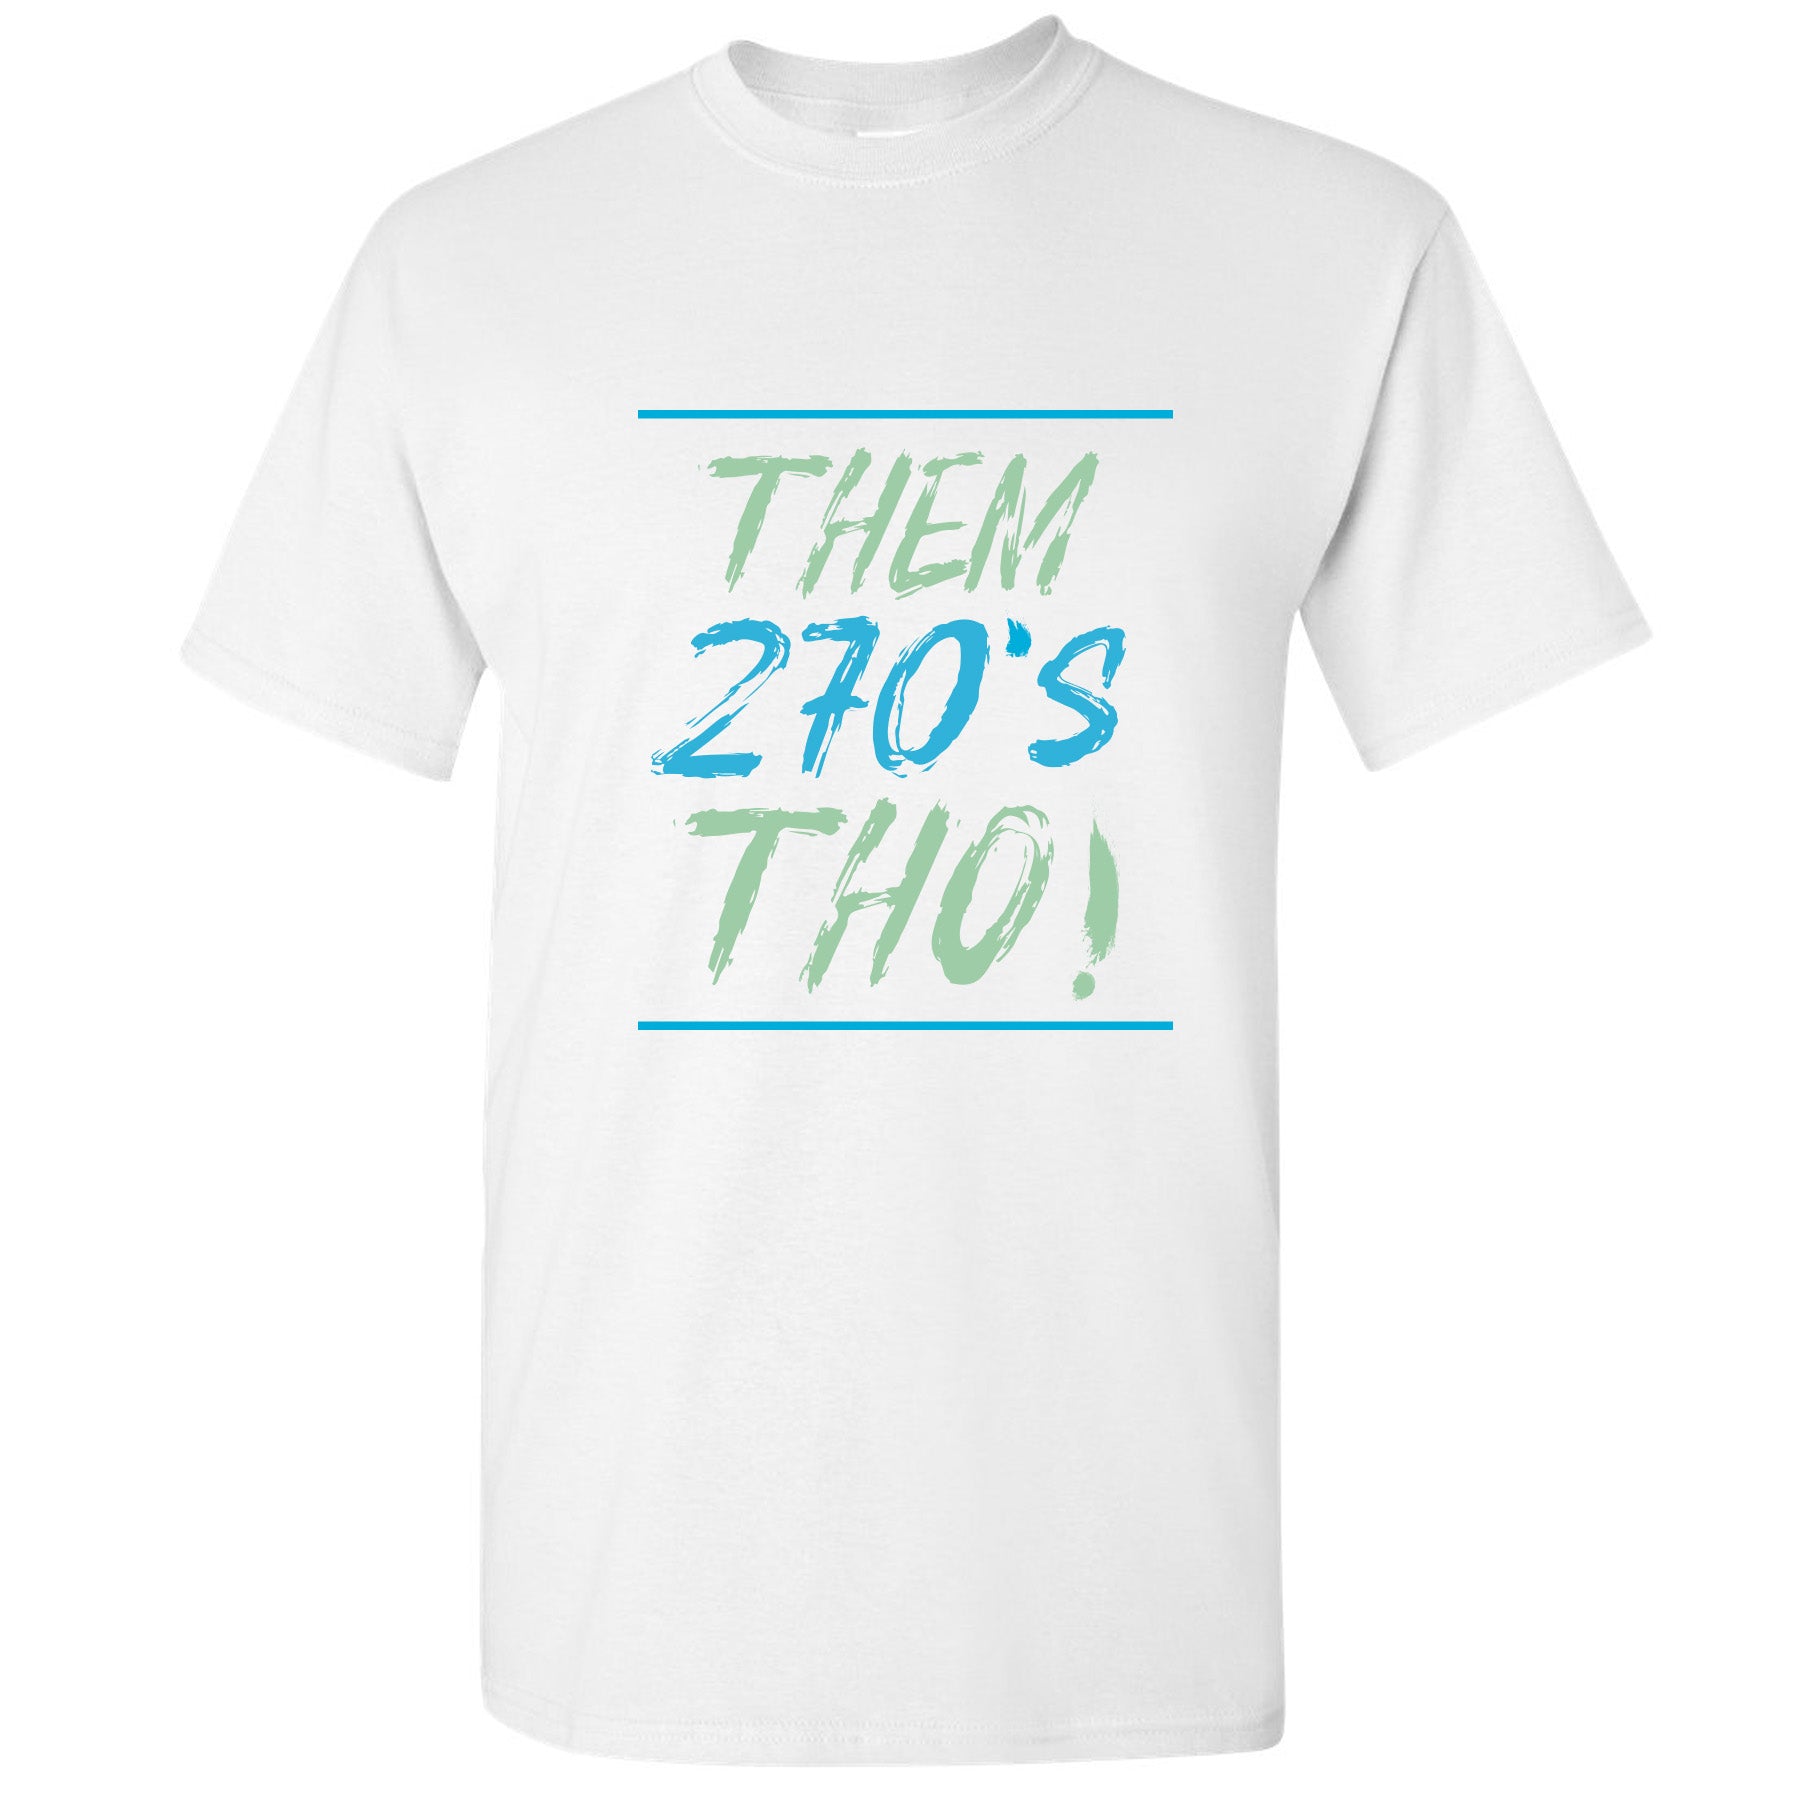 nike 270 t shirts